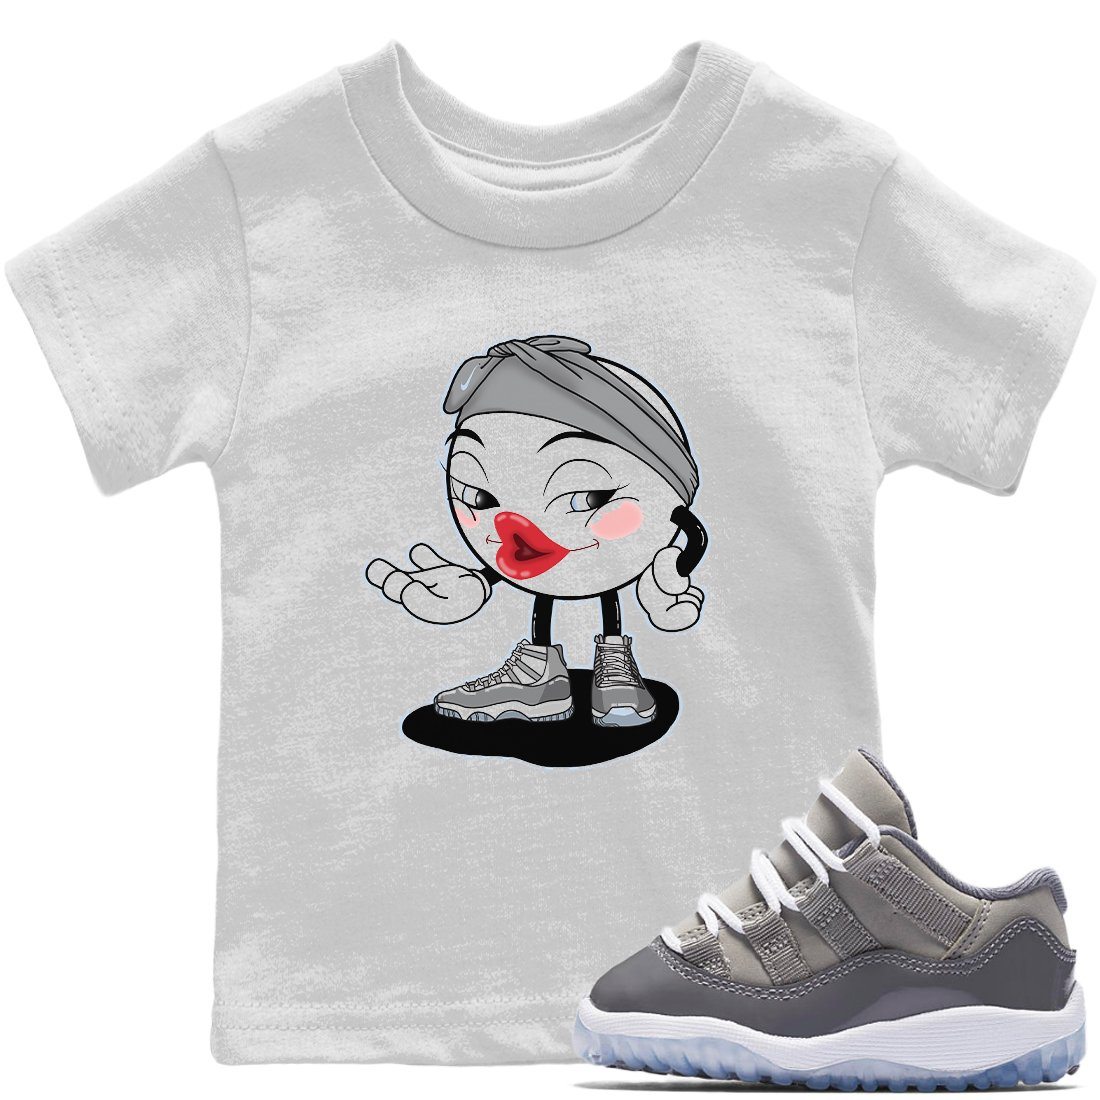 Jordan 11 Cool Grey Sneaker Match Tees Sexy Emoji Sneaker Tees Jordan 11 Cool Grey Sneaker Release Tees Kids Shirts